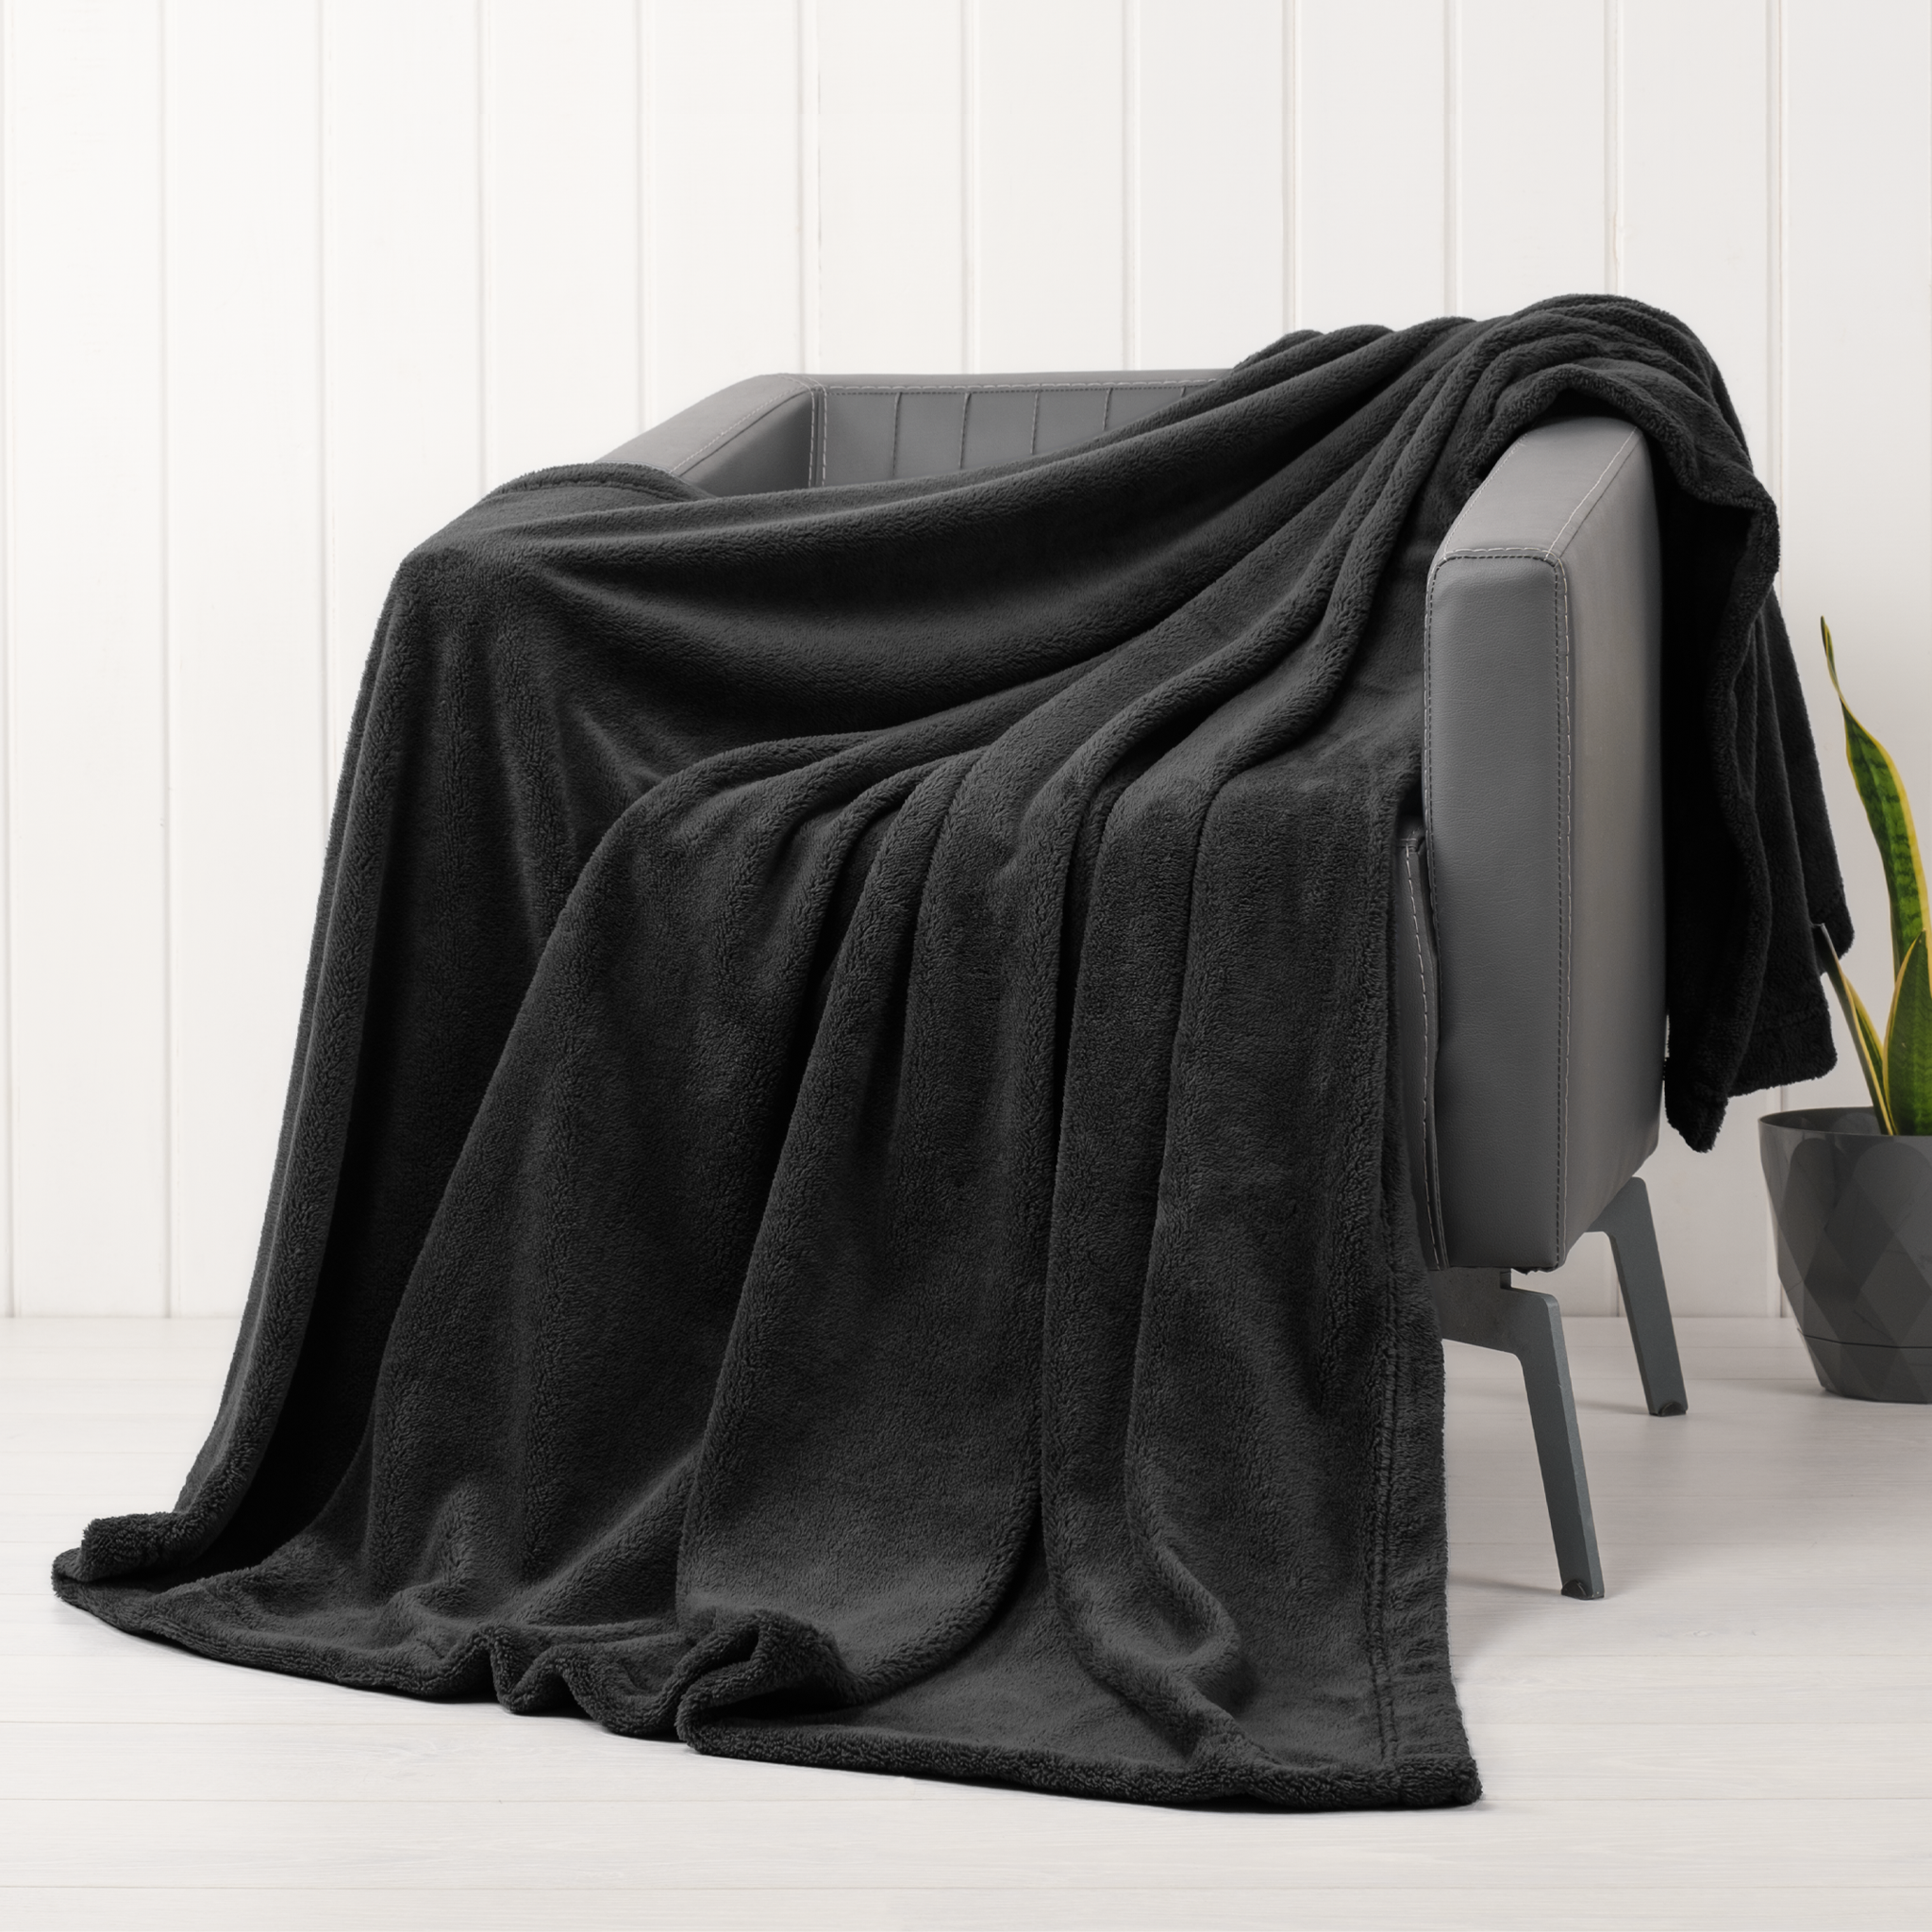 American Soft Linen - Bedding Fleece Blanket - Wholesale - 15 Set Case Pack - Twin Size 60x80 inches - Black - 1